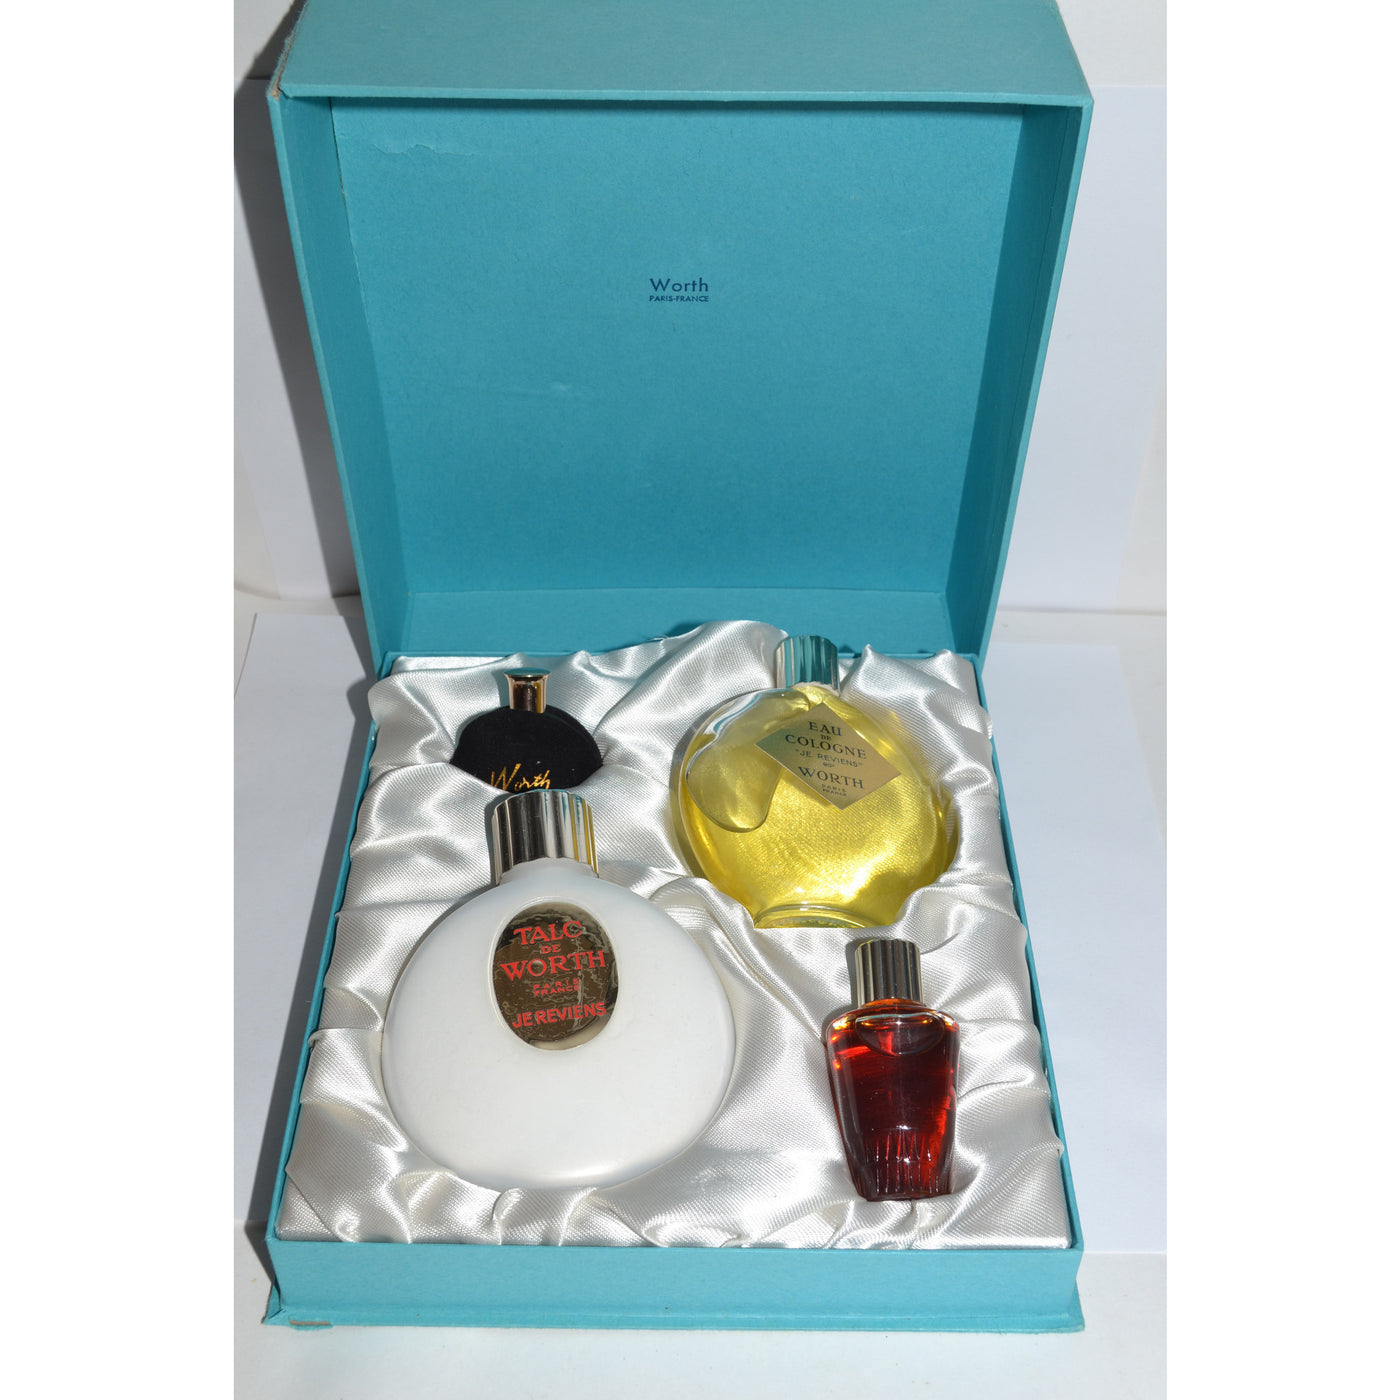 Vintage Je Reviens Perfume Set By Worth